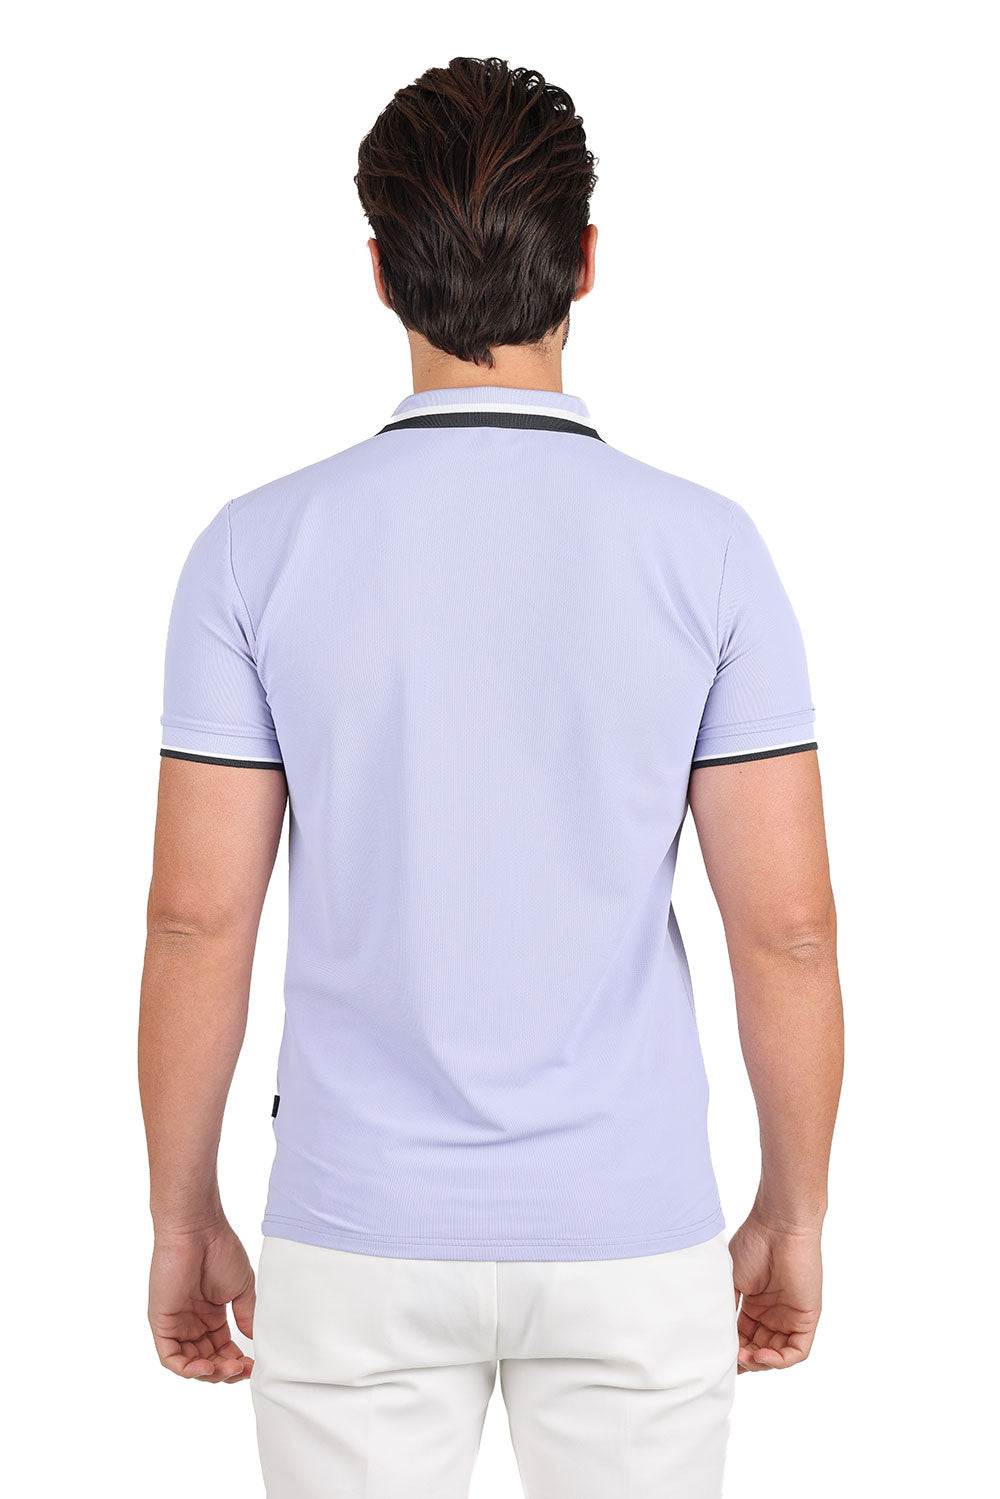 Barabas Men's Solid Color Cotton Short Sleeve Polo Shirts 3PS125 Purple